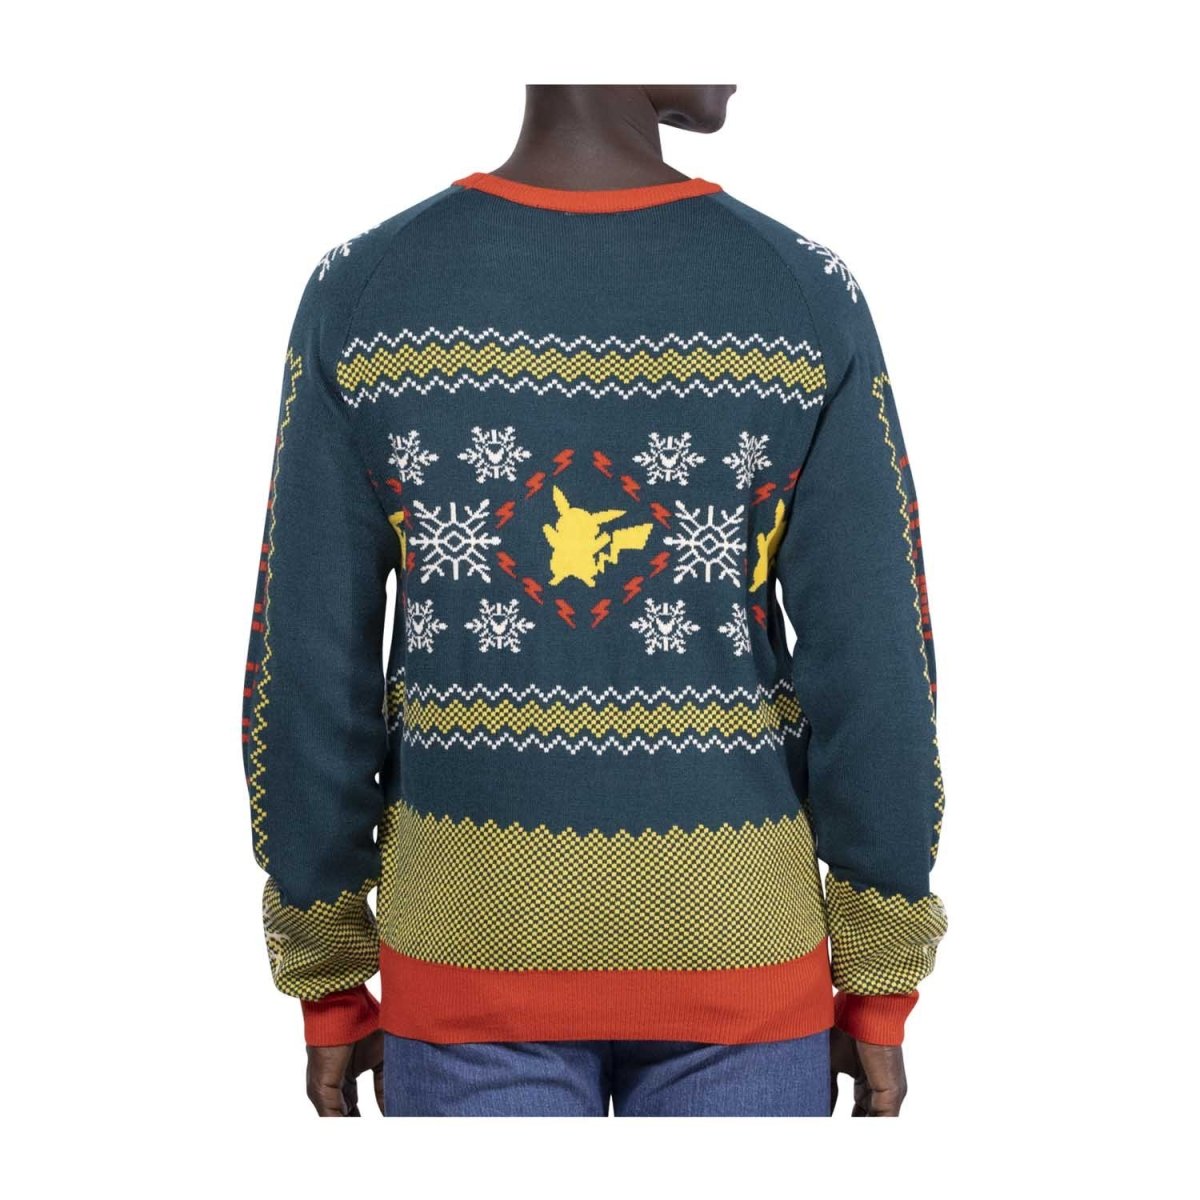 Pikachu Festive Winter Knit Sweater - Adult | Pokémon Center Official Site